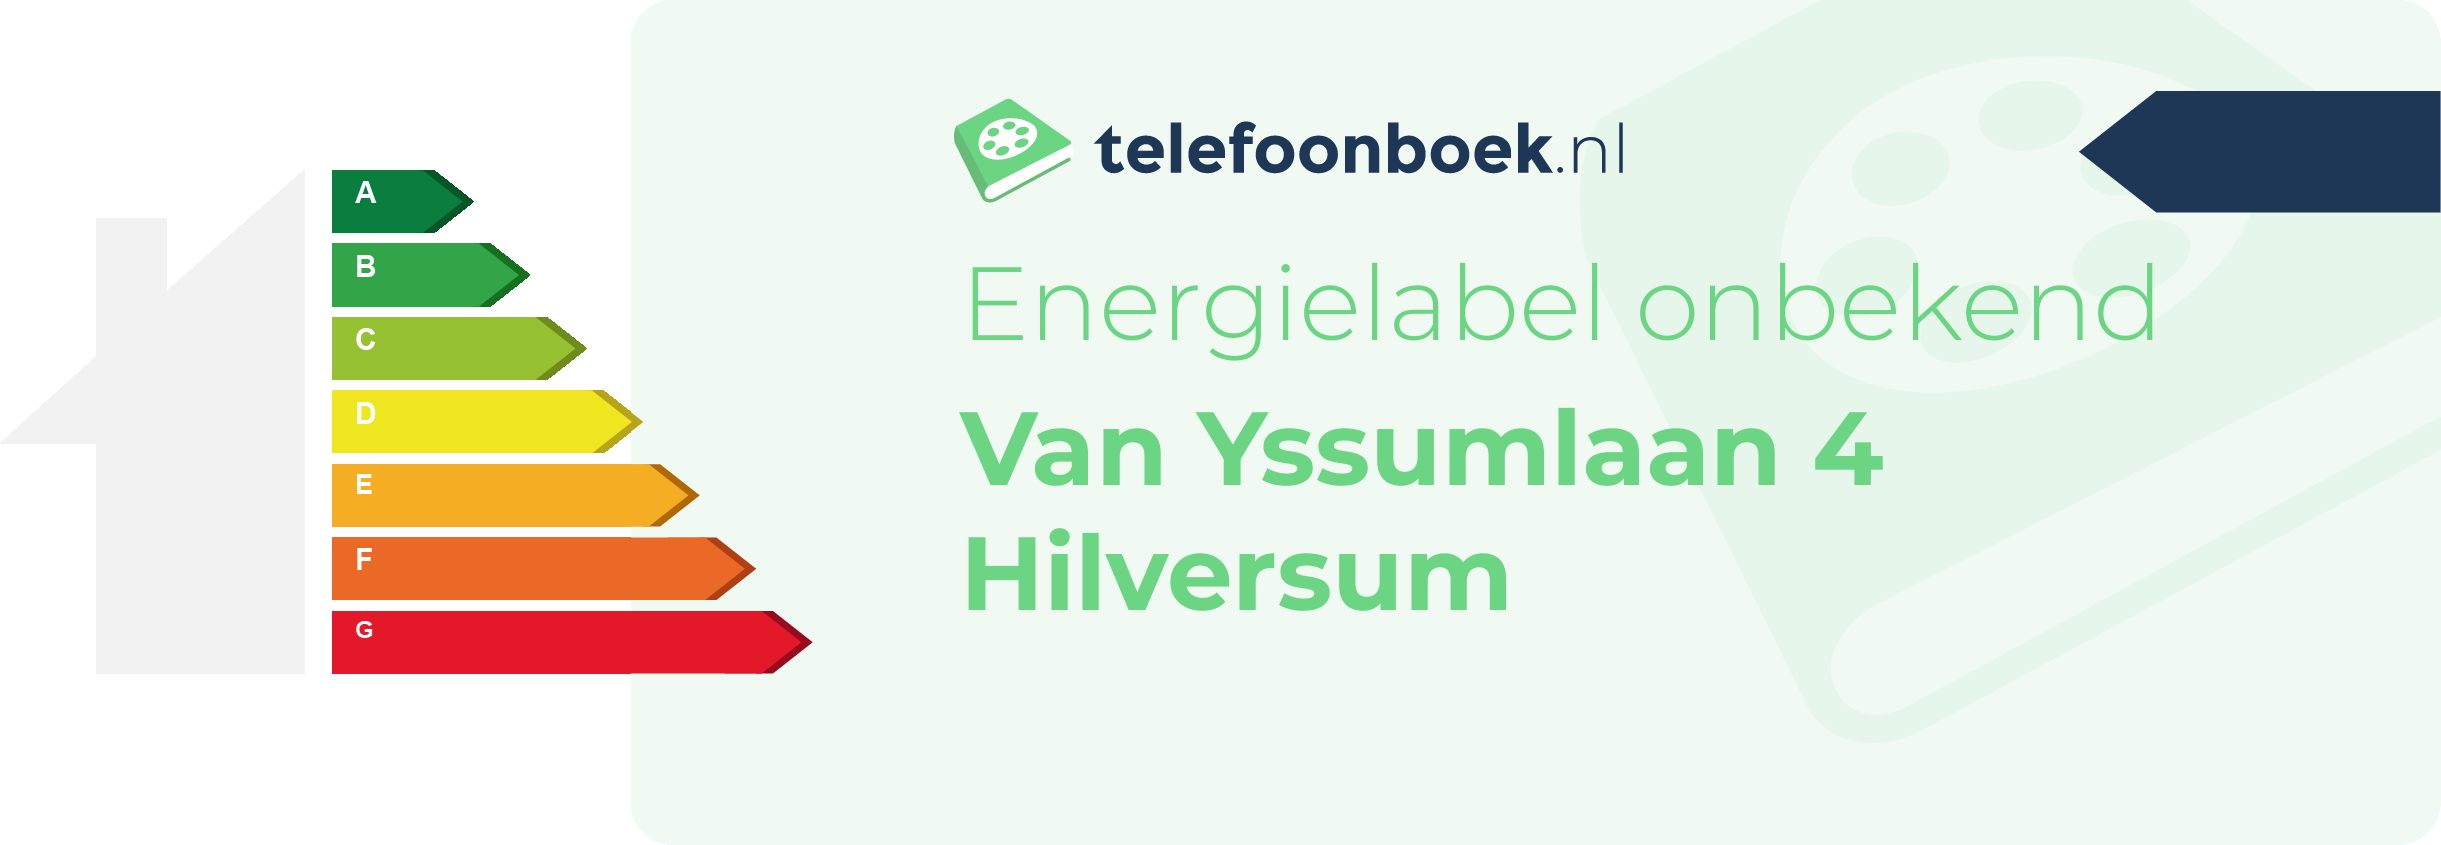 Energielabel Van Yssumlaan 4 Hilversum